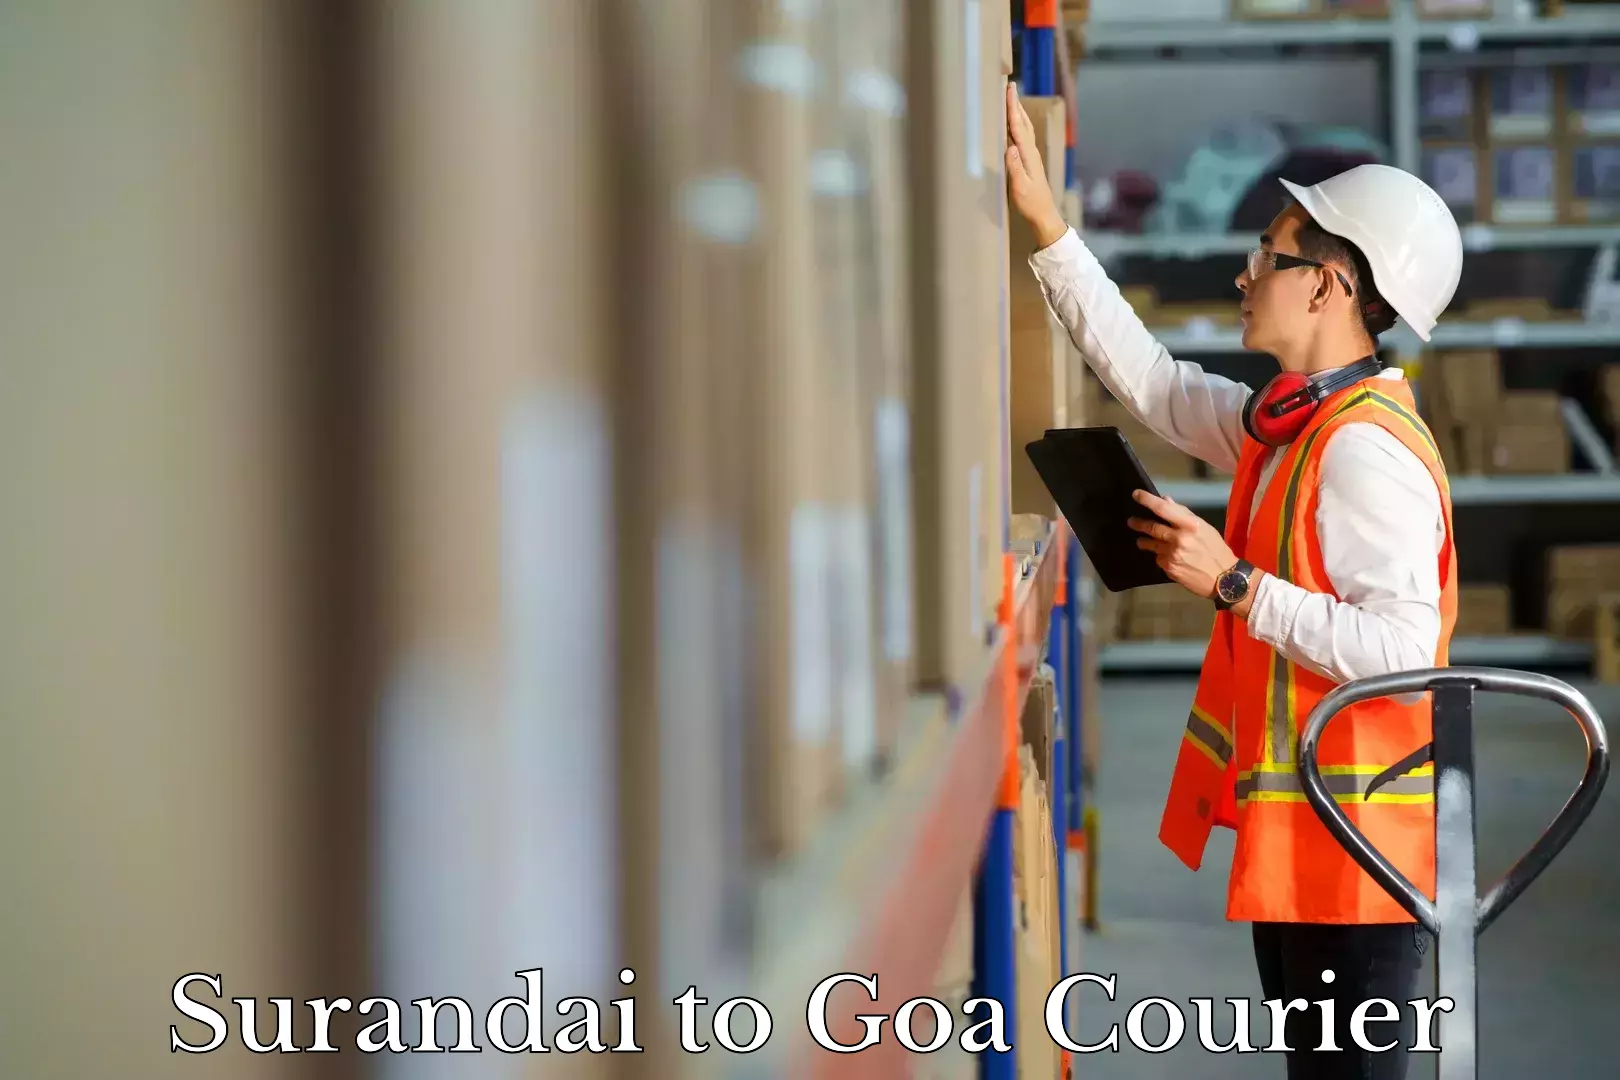 Luggage shipment specialists Surandai to Goa